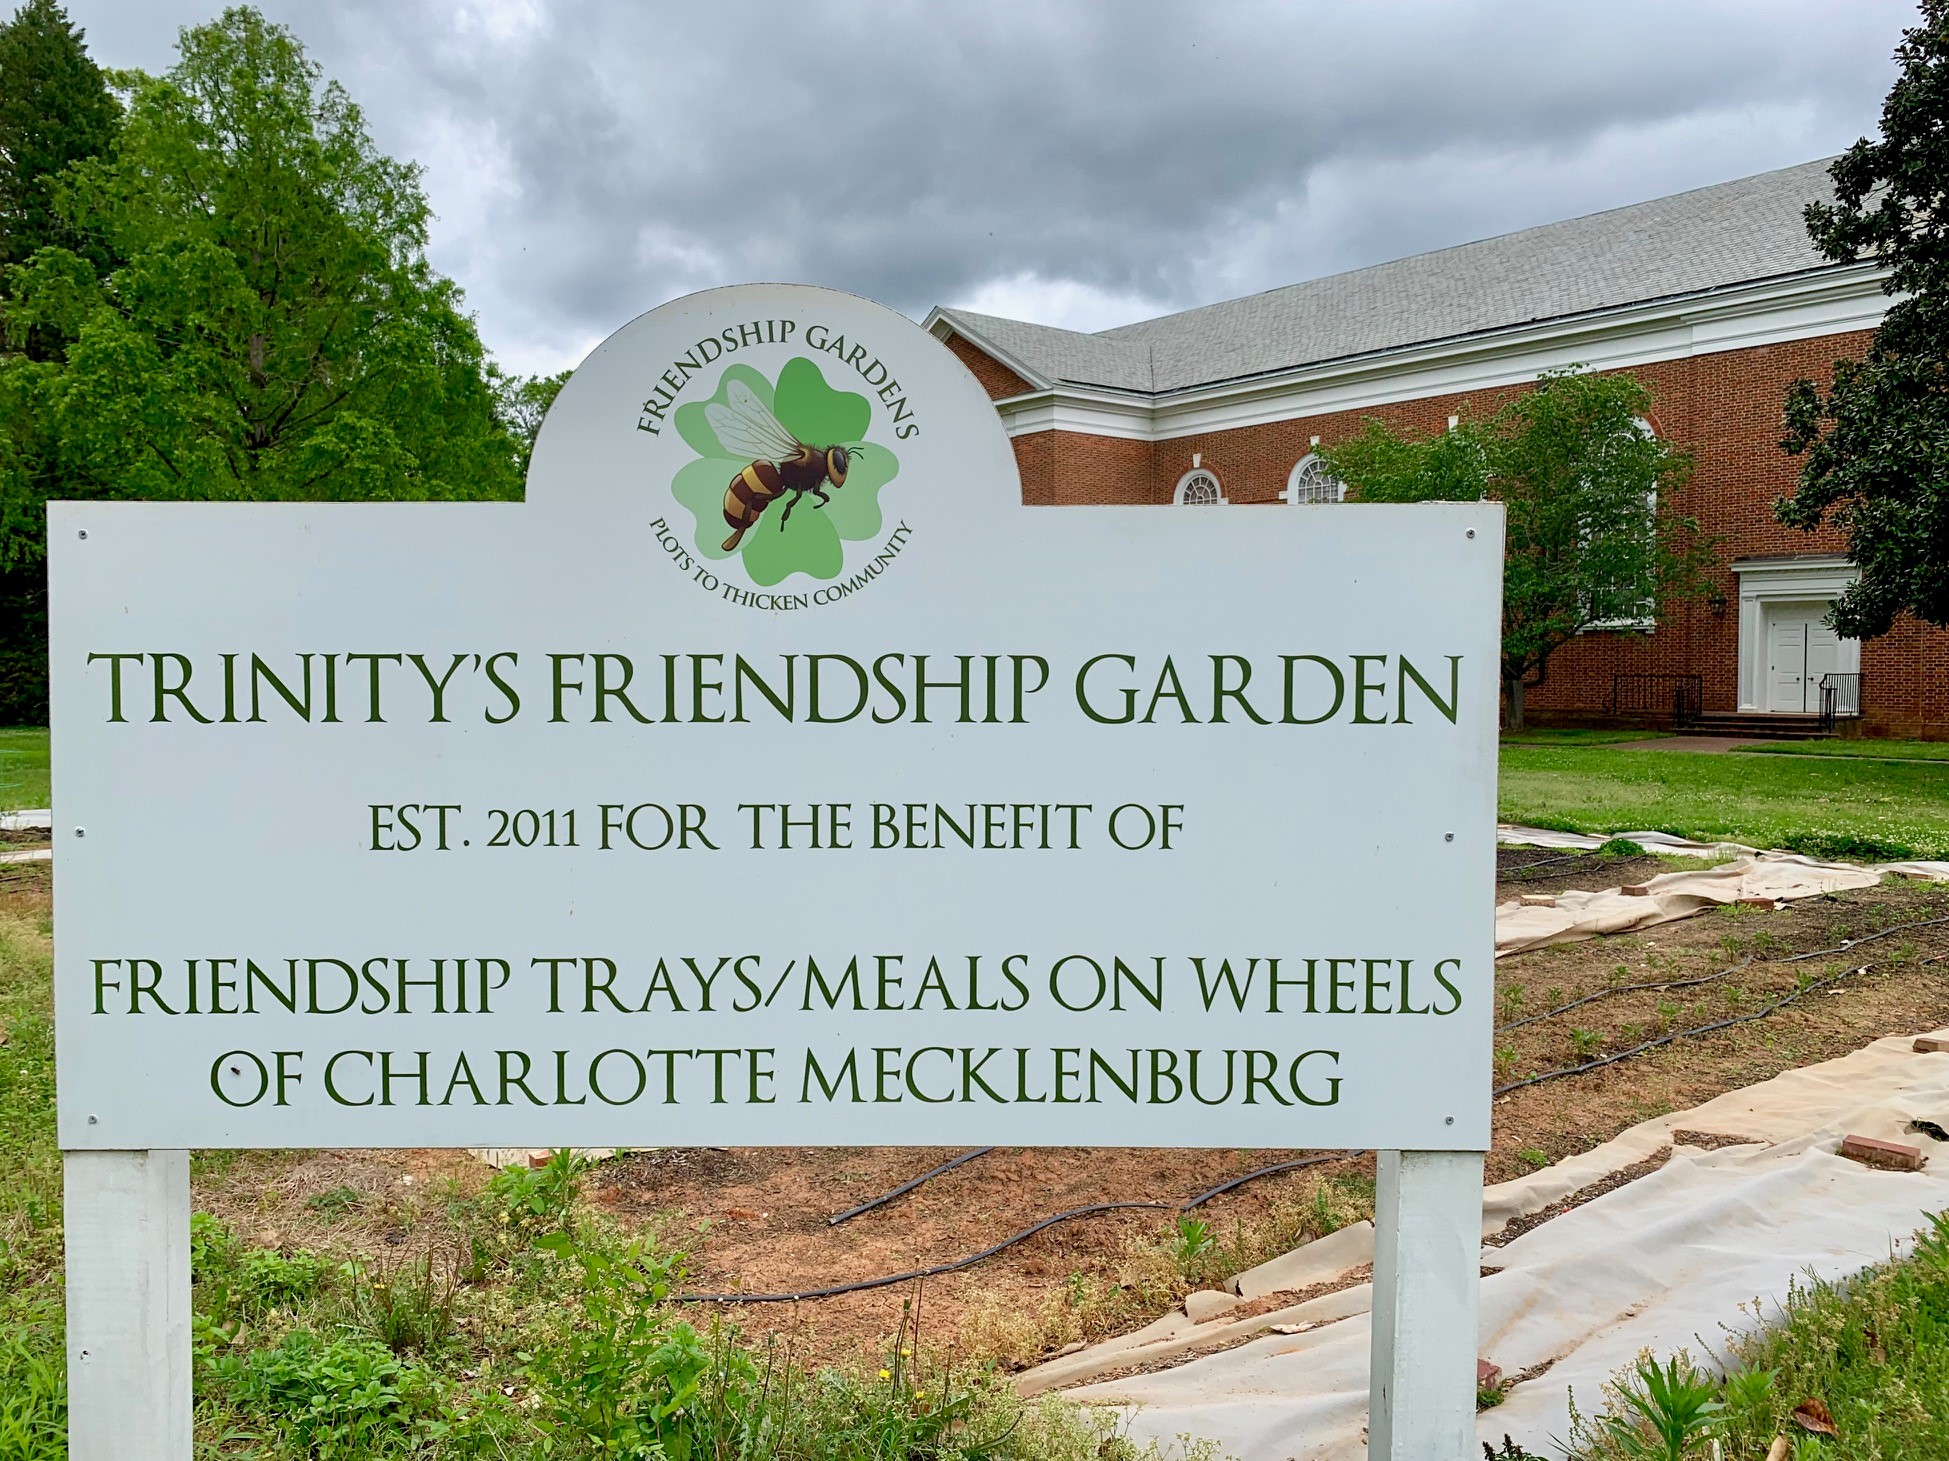 Trinity’s Friendship Garden: Growing a Spirit of Giving